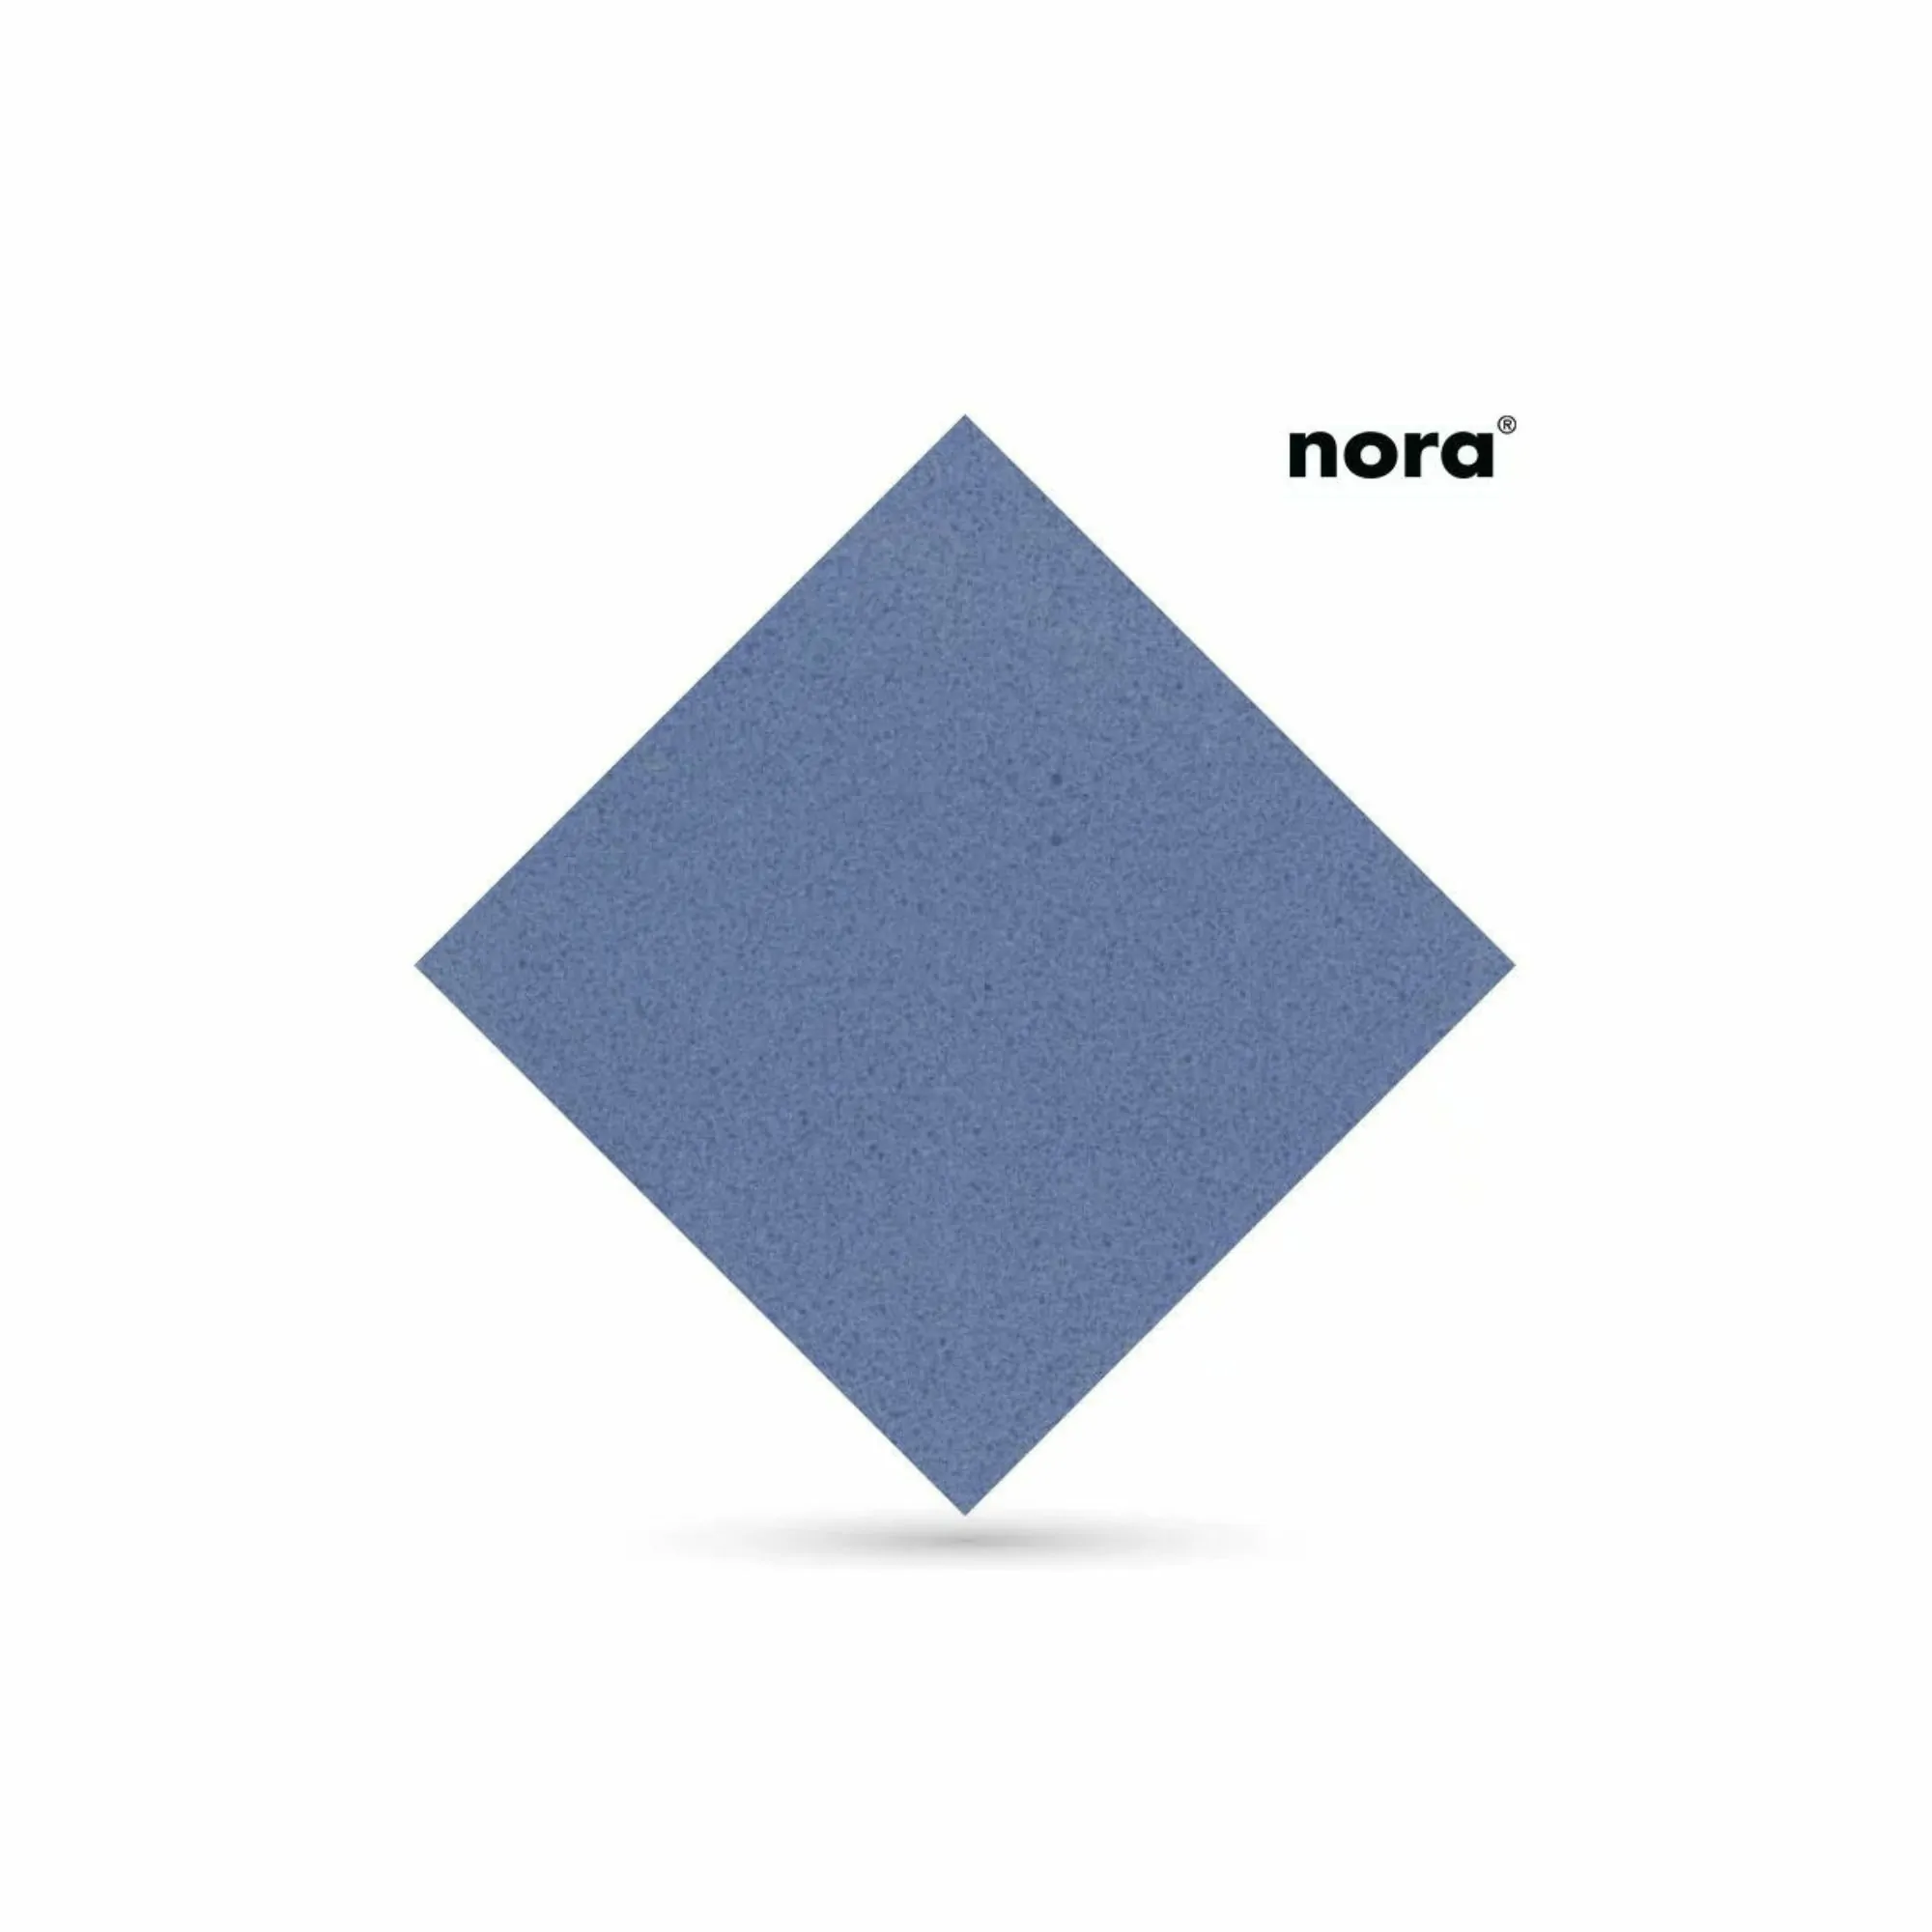 Astro Form 15 - Shore 10 - EVA - Nora